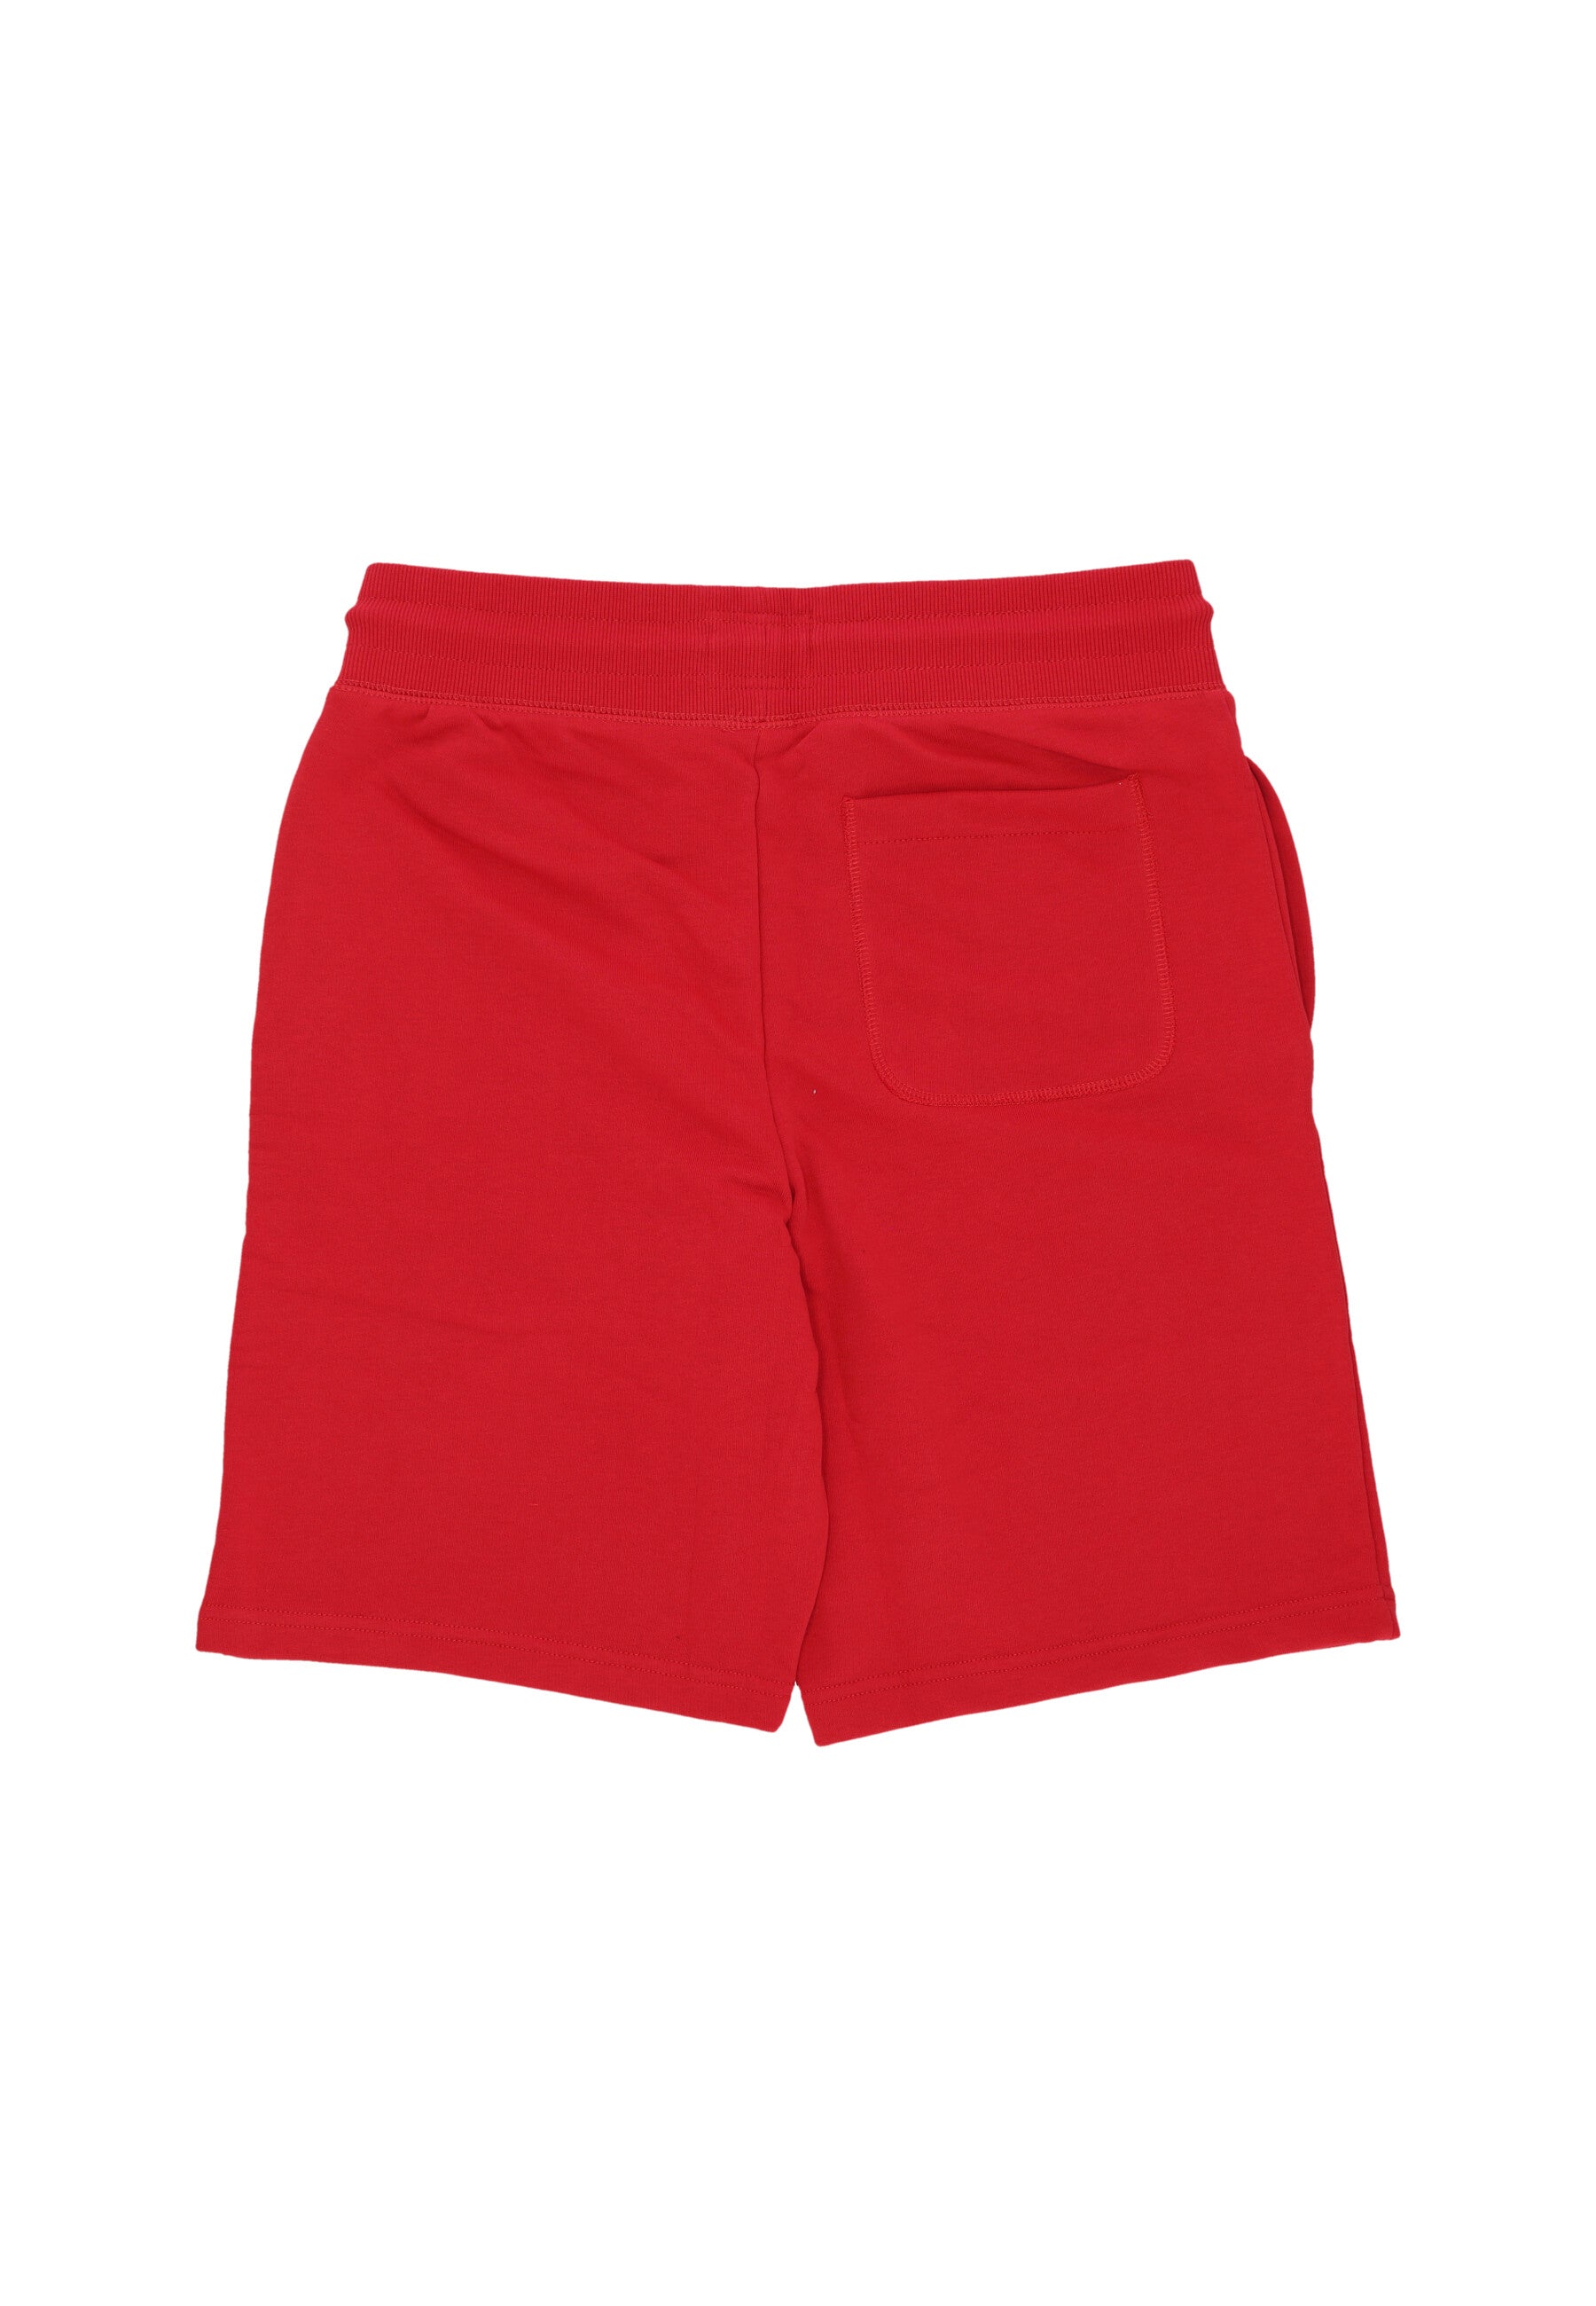 Pantalone Corto Tuta Uomo Mlb Base Runner Emb Helix Shorts Neyyan Red BB017PMSWPB581051RD